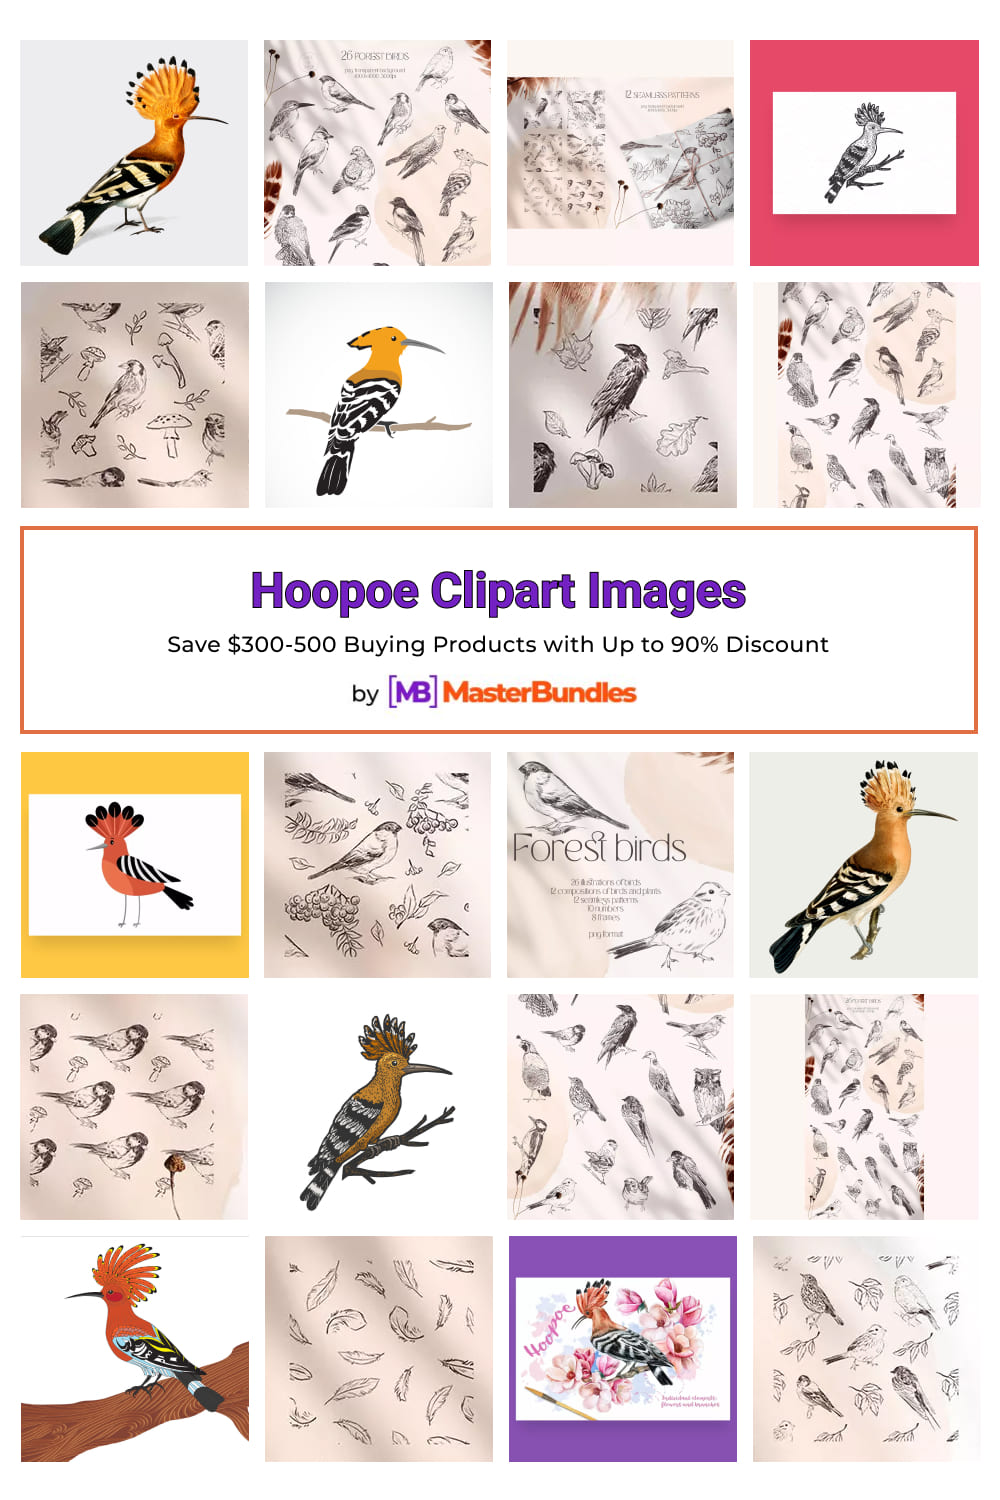 Hoopoe Clipart Images Pinterest.